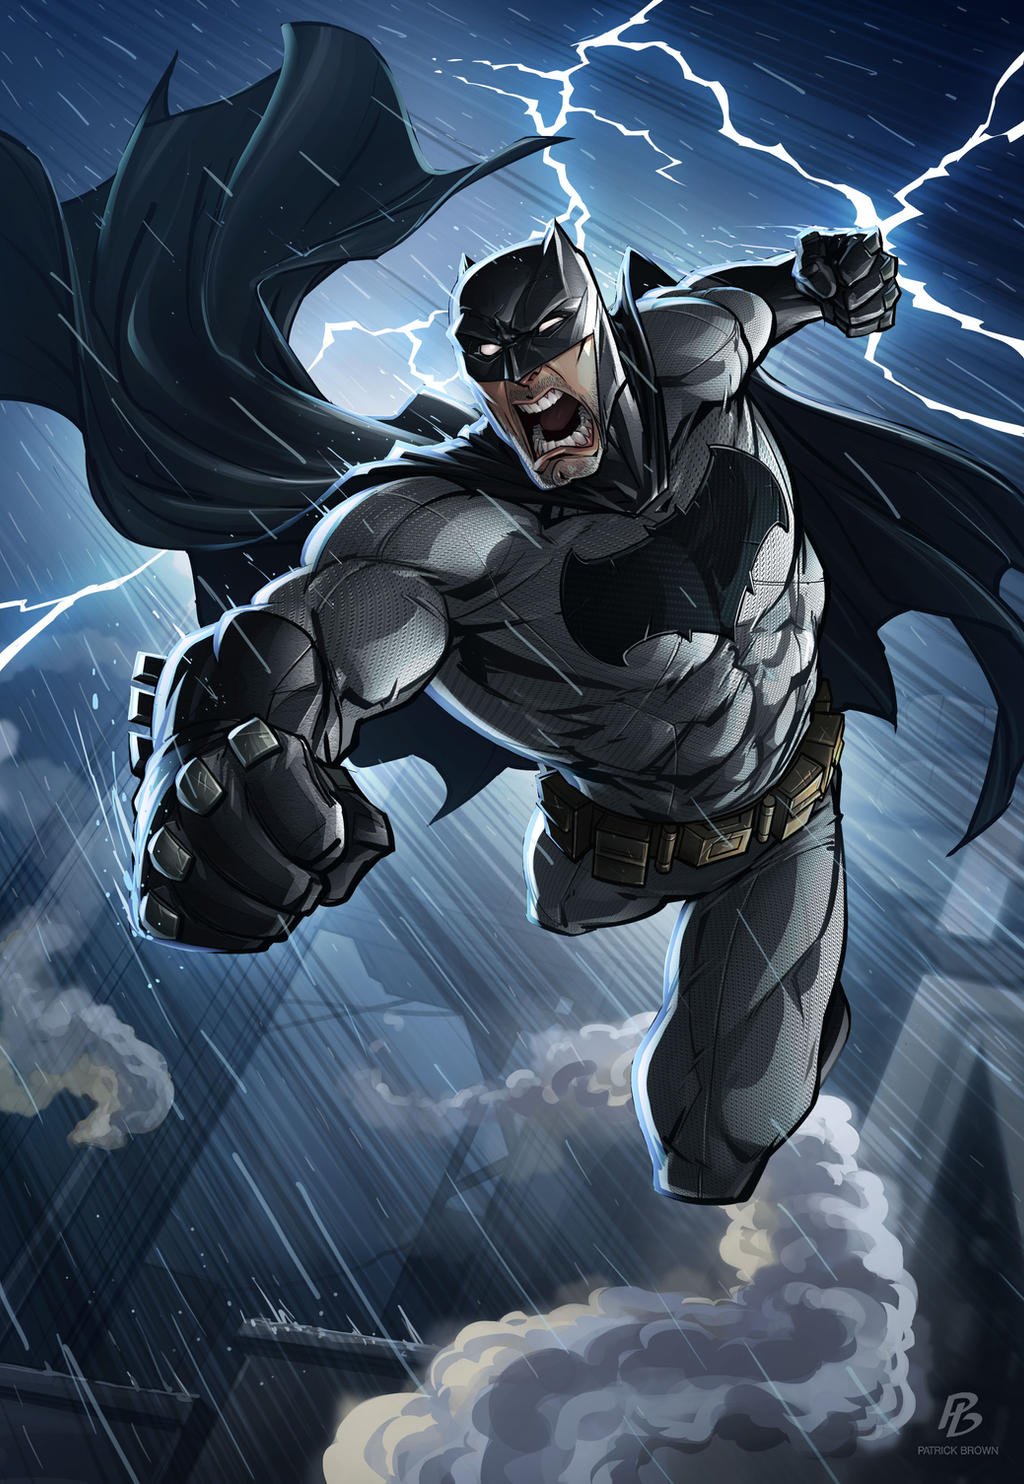 batman_v_superman__dawn_of_justice_by_patrickbrown_d9w598z-fullview.jpeg